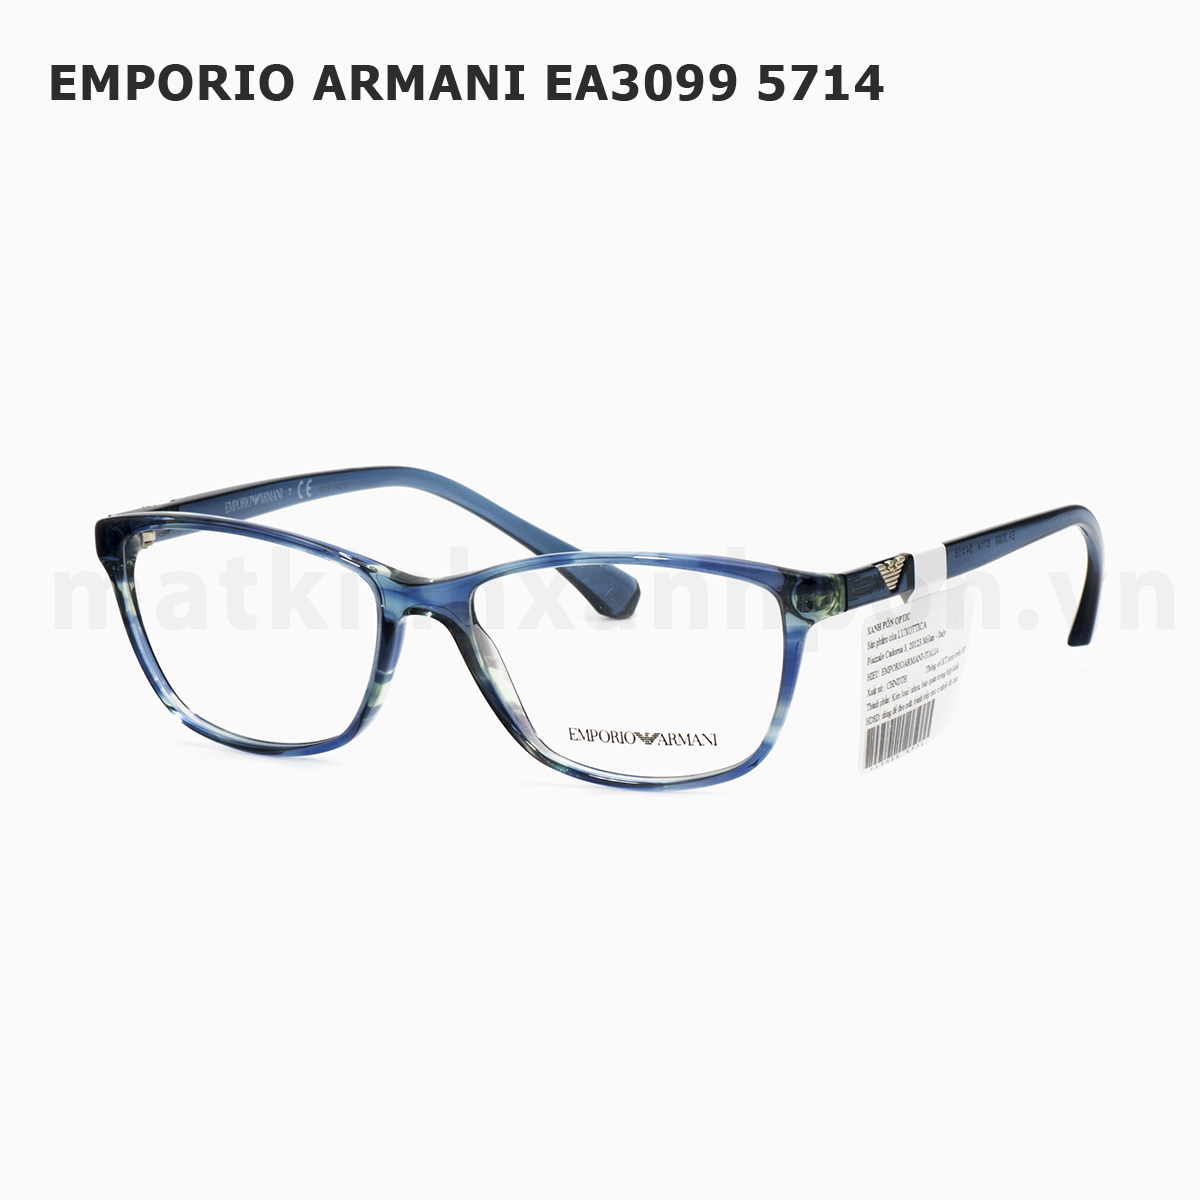 Emporio Armani EA3099 5714